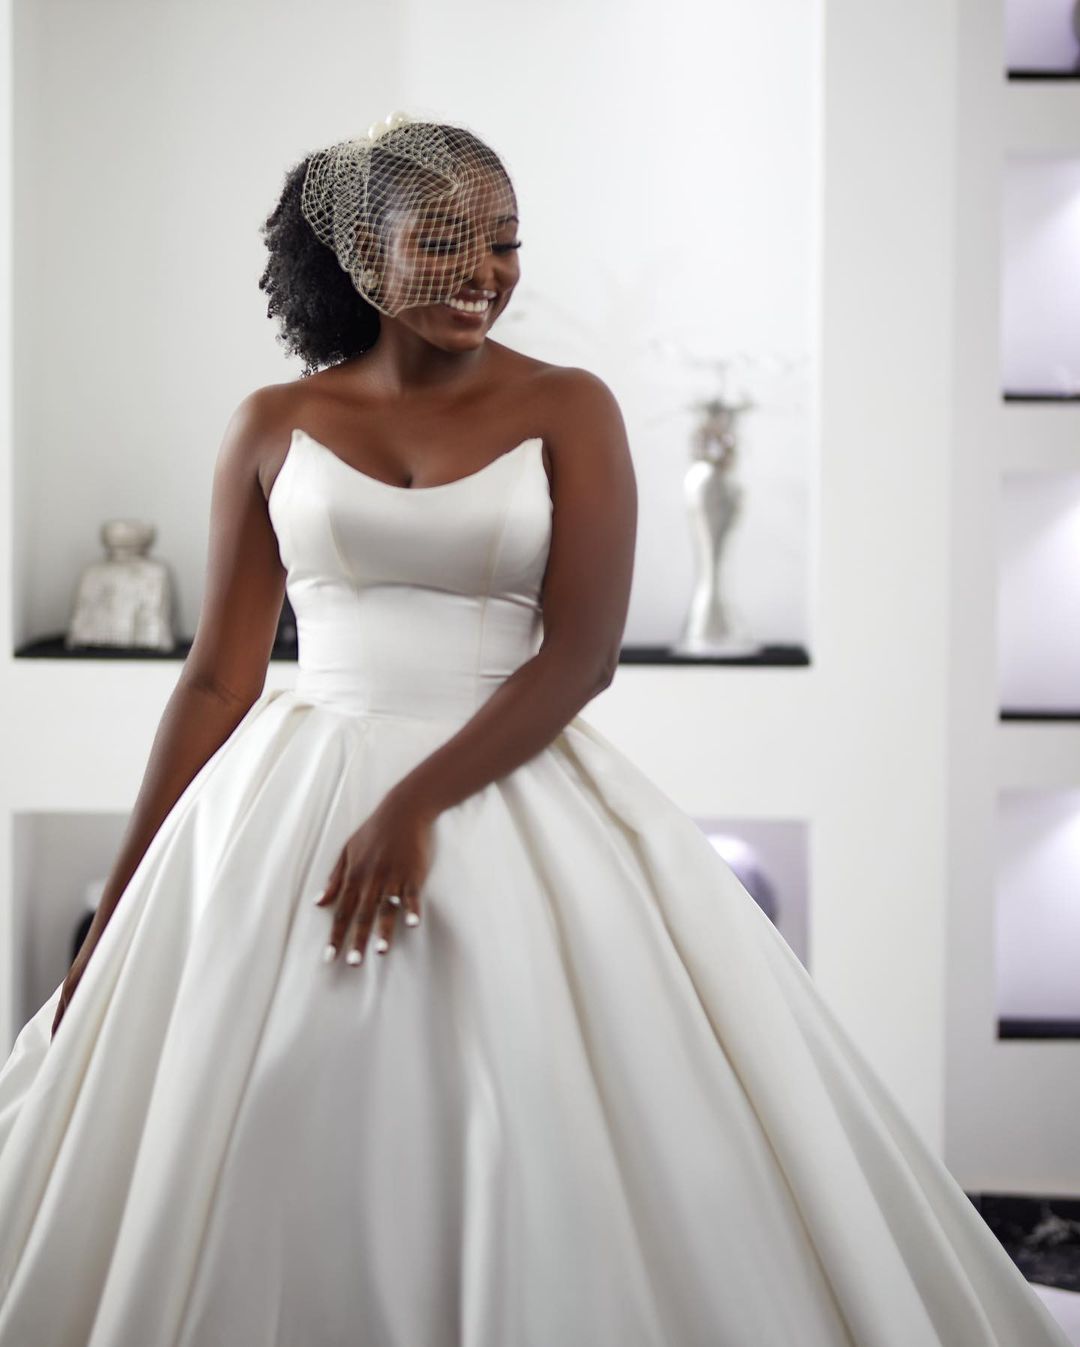 This Minimalist Wedding Dress Is Stunning